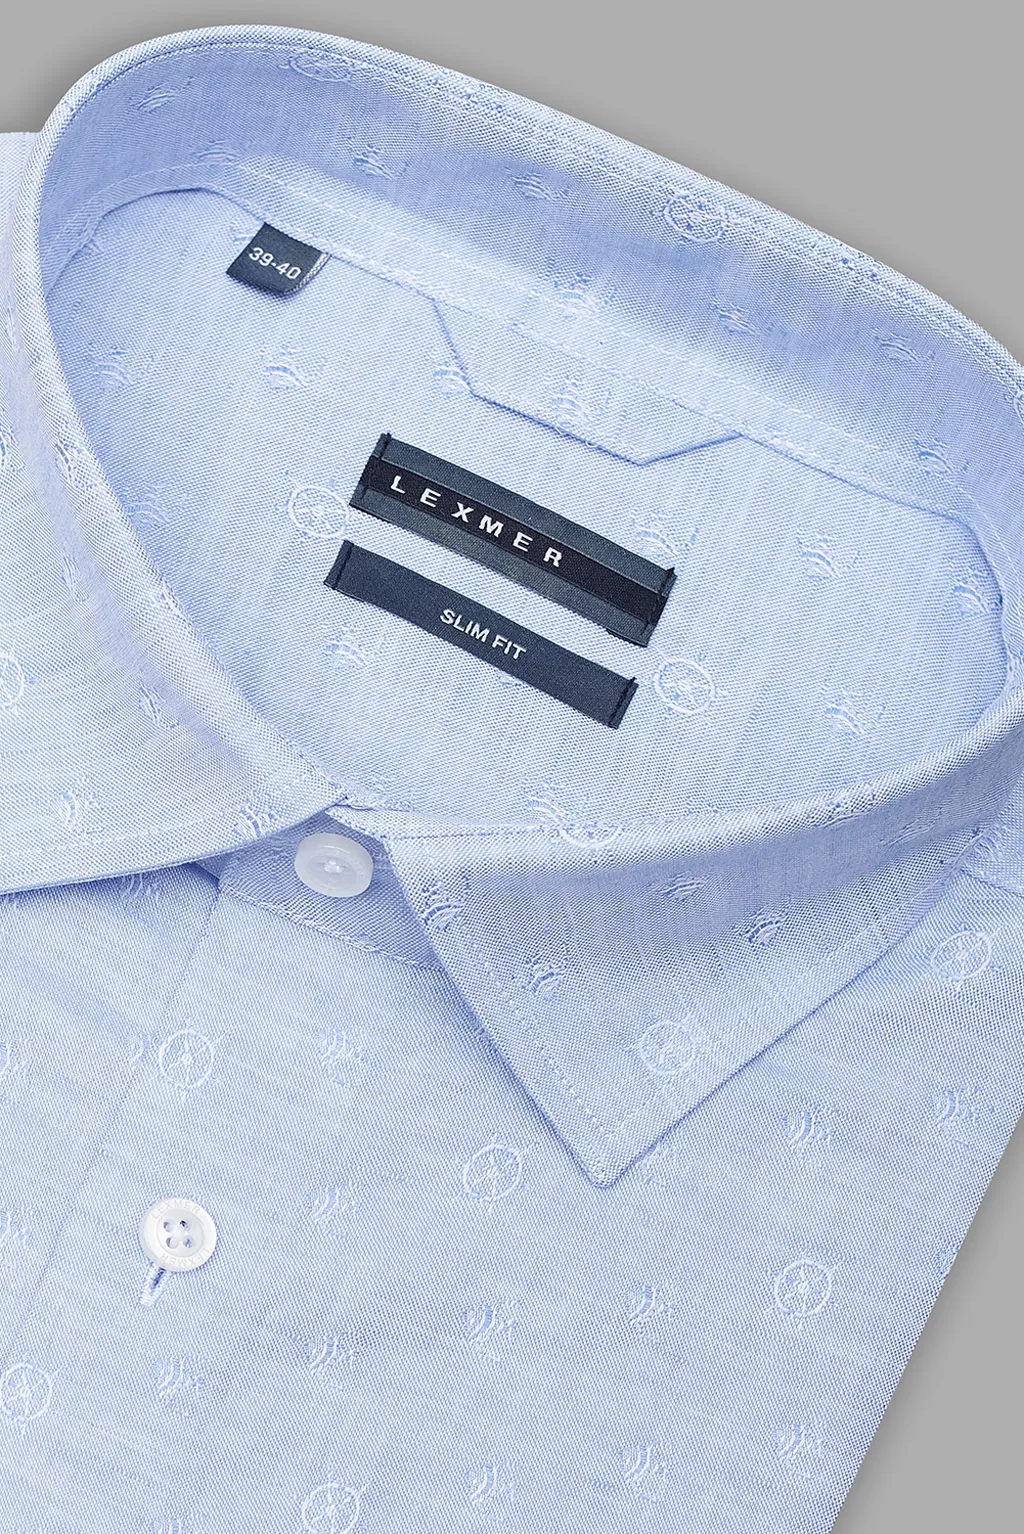 Голубая рубашка с микродизайном и коротким рукавом Slim Fit